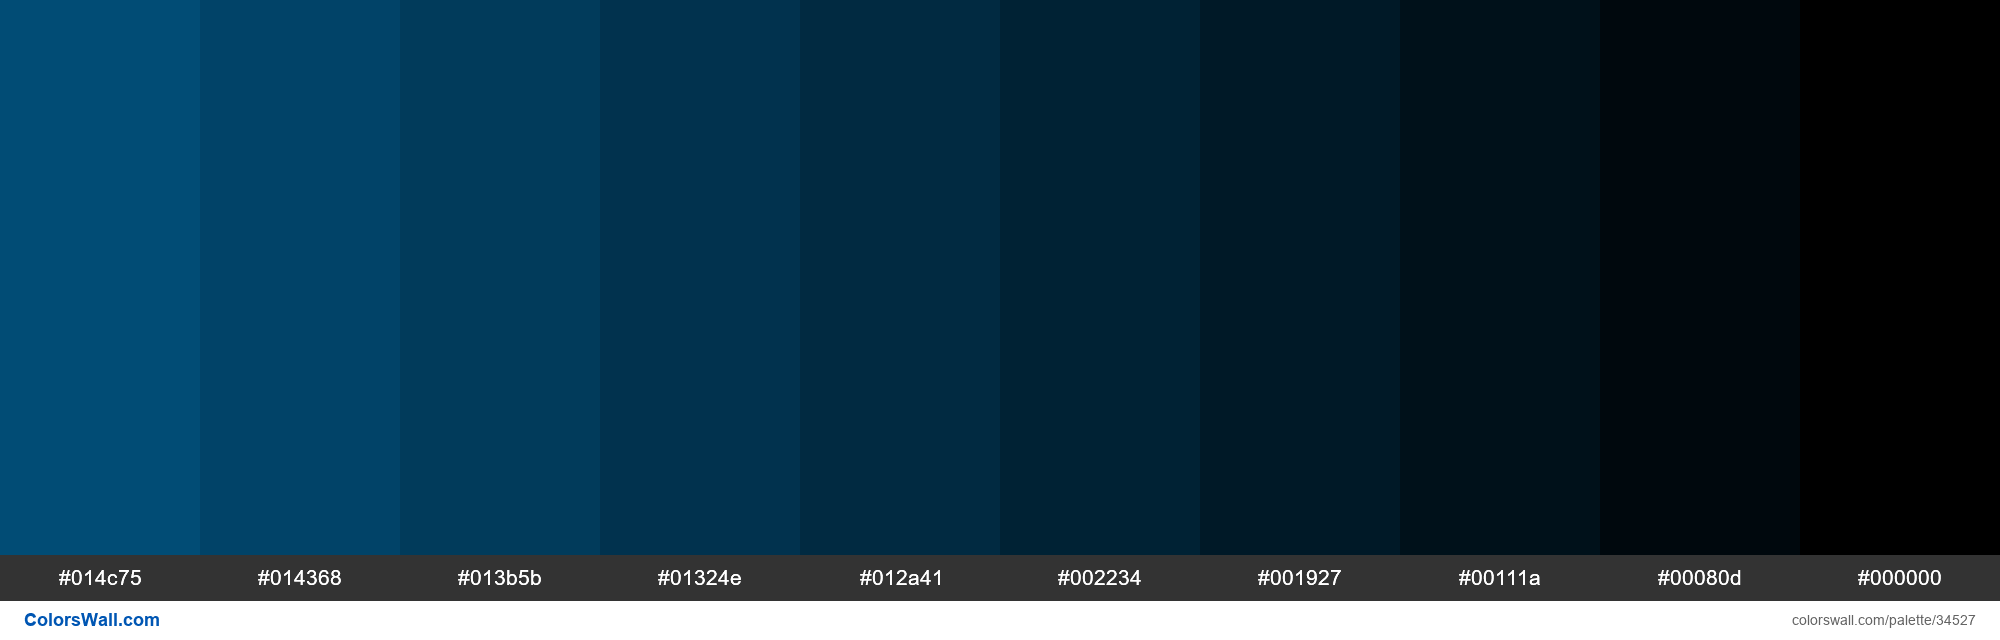 Shades Xkcd Color Deep Sea Blue 0154 Hex Hex Rgb Codes